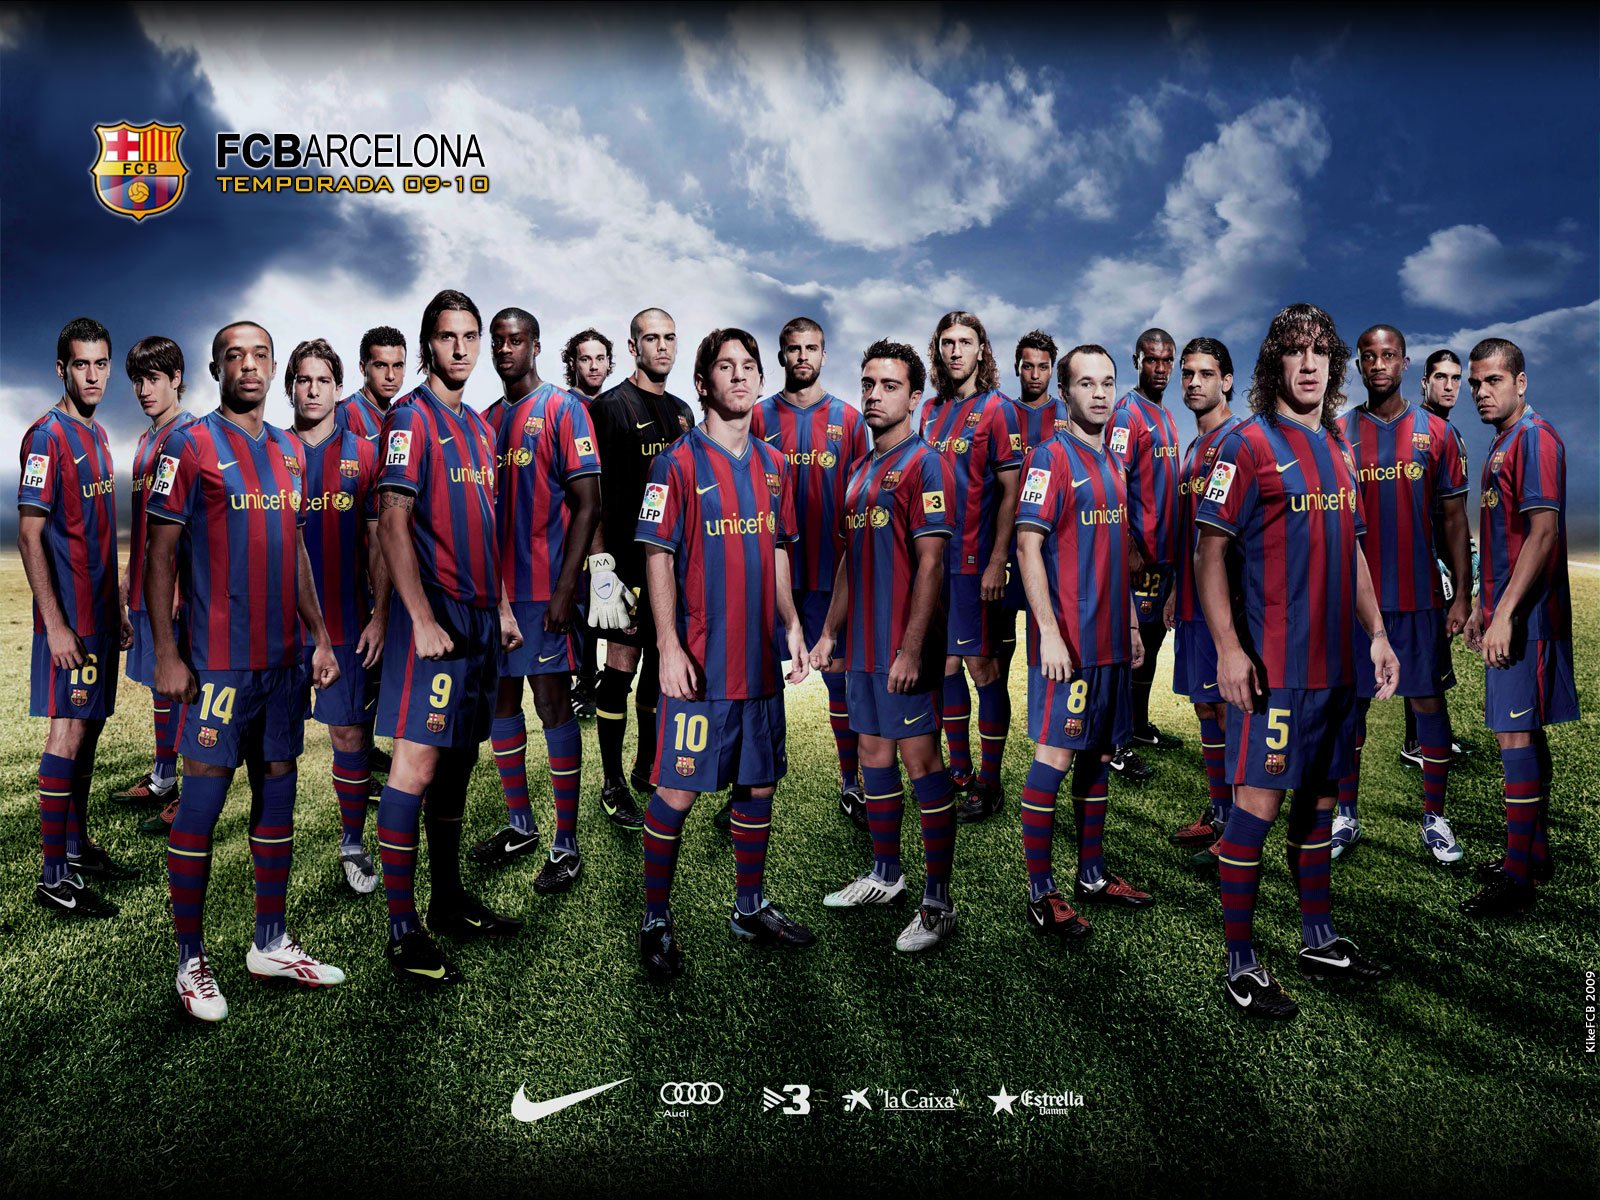 fc barcelona squad fc barcelona squad camp nou soccer stadium